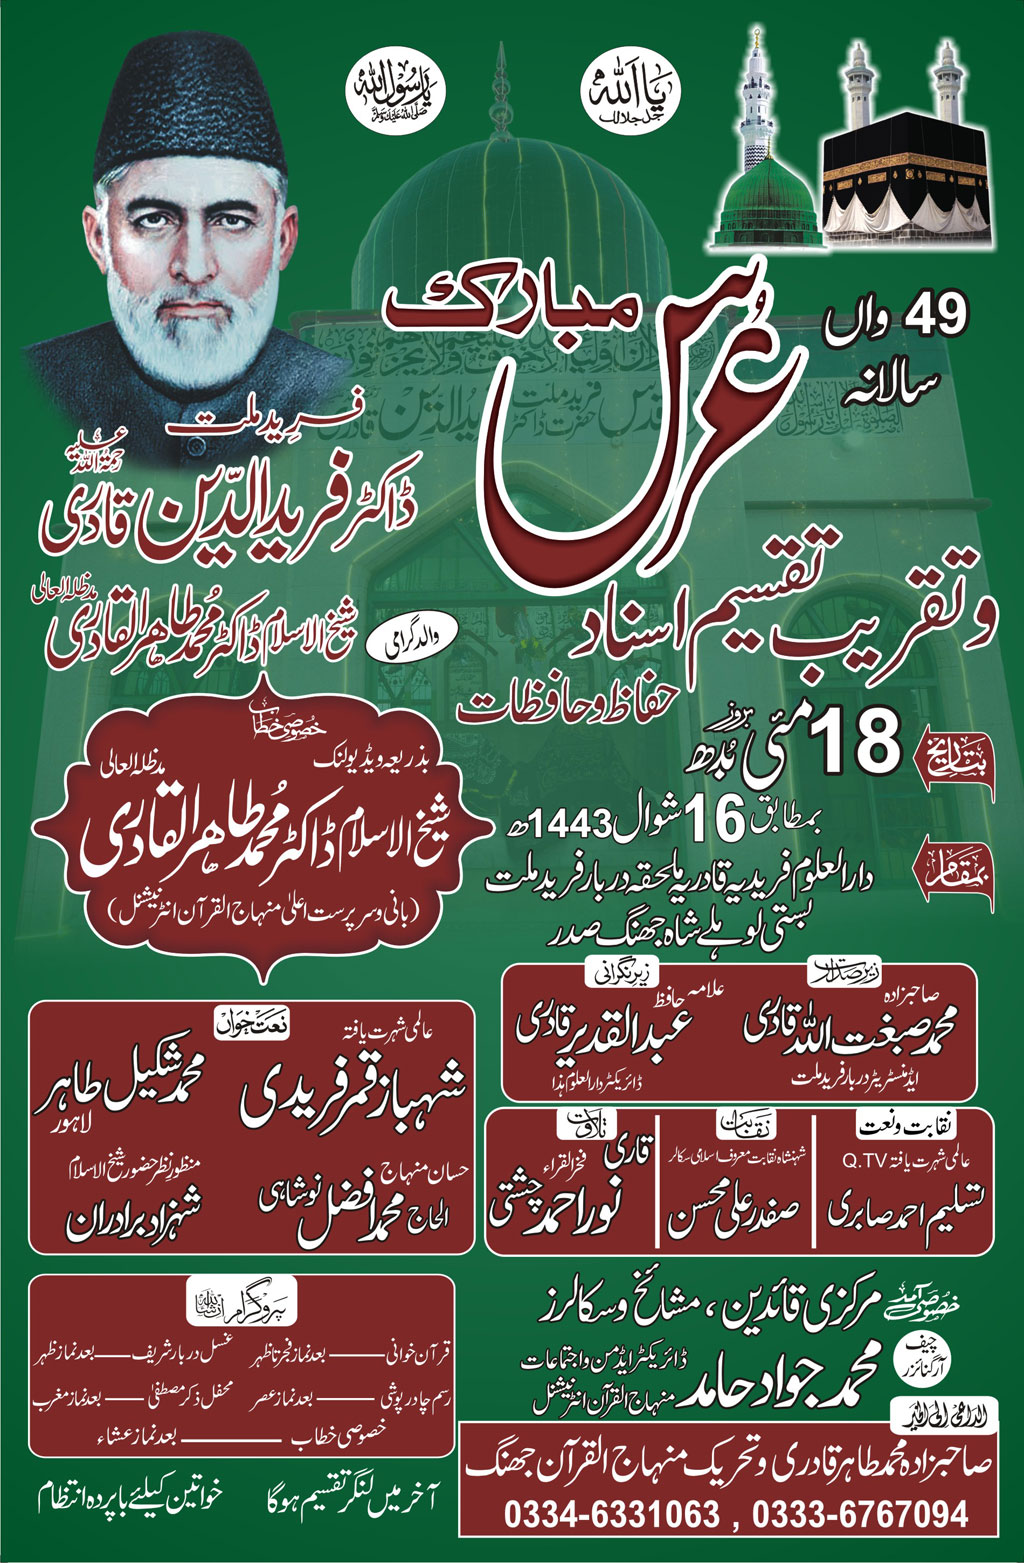 Annual Urs Ceremony of Farid-e-Millat Dr Farid-ud-Din Qadri